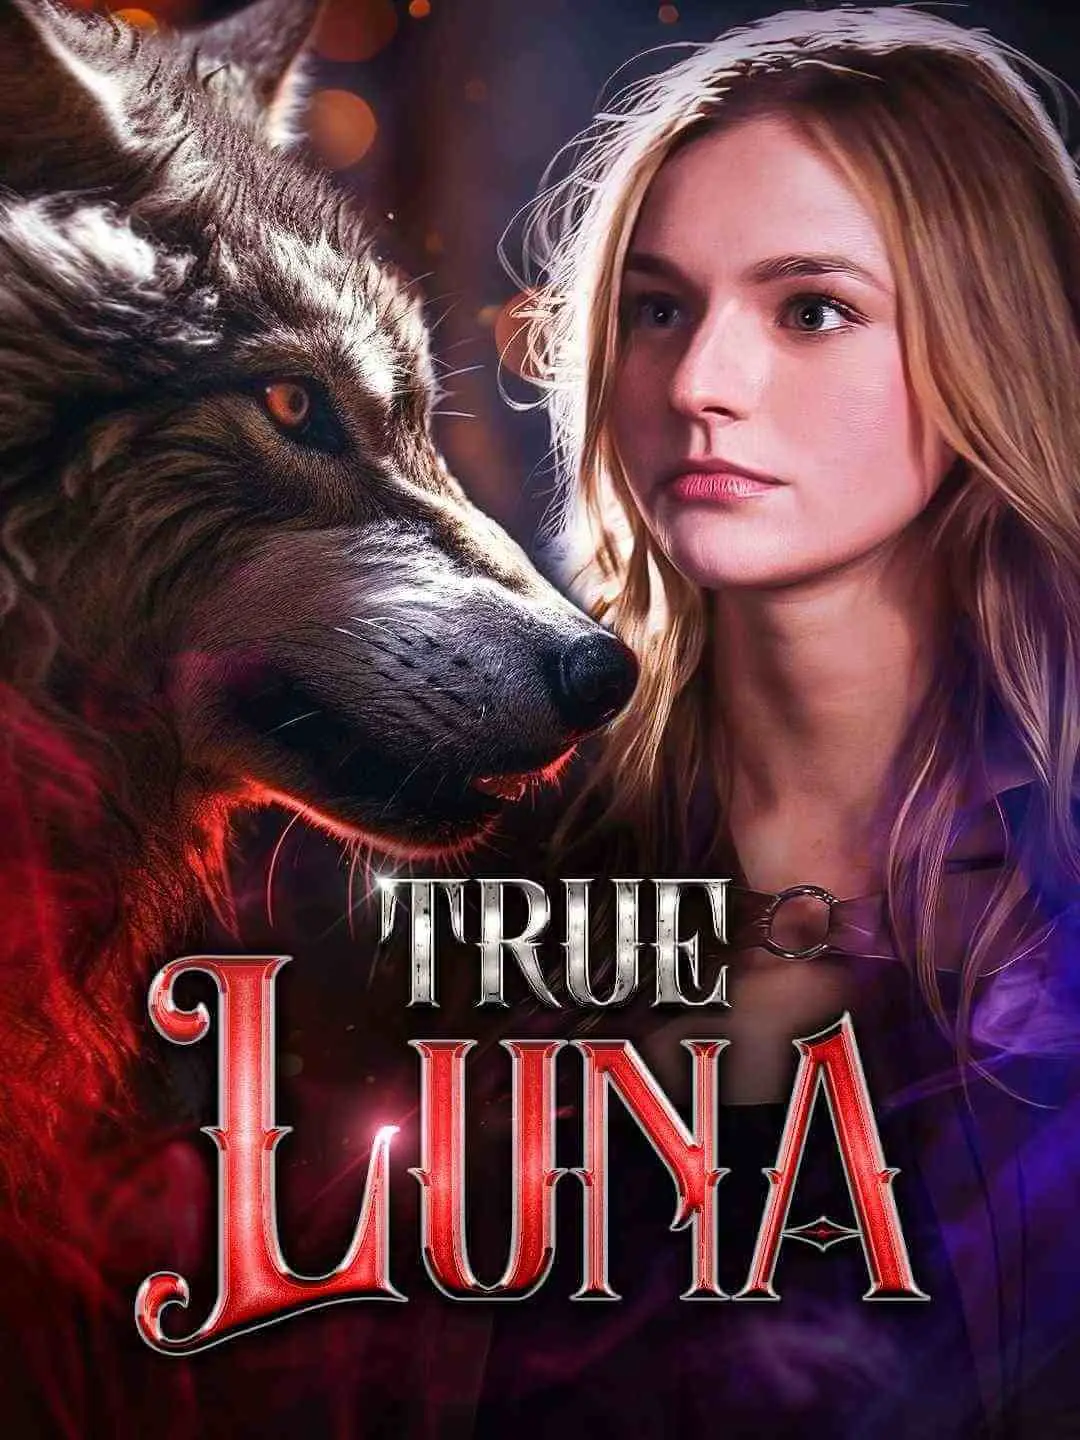 True Luna - Full Drama Episodes for free - Final Eps